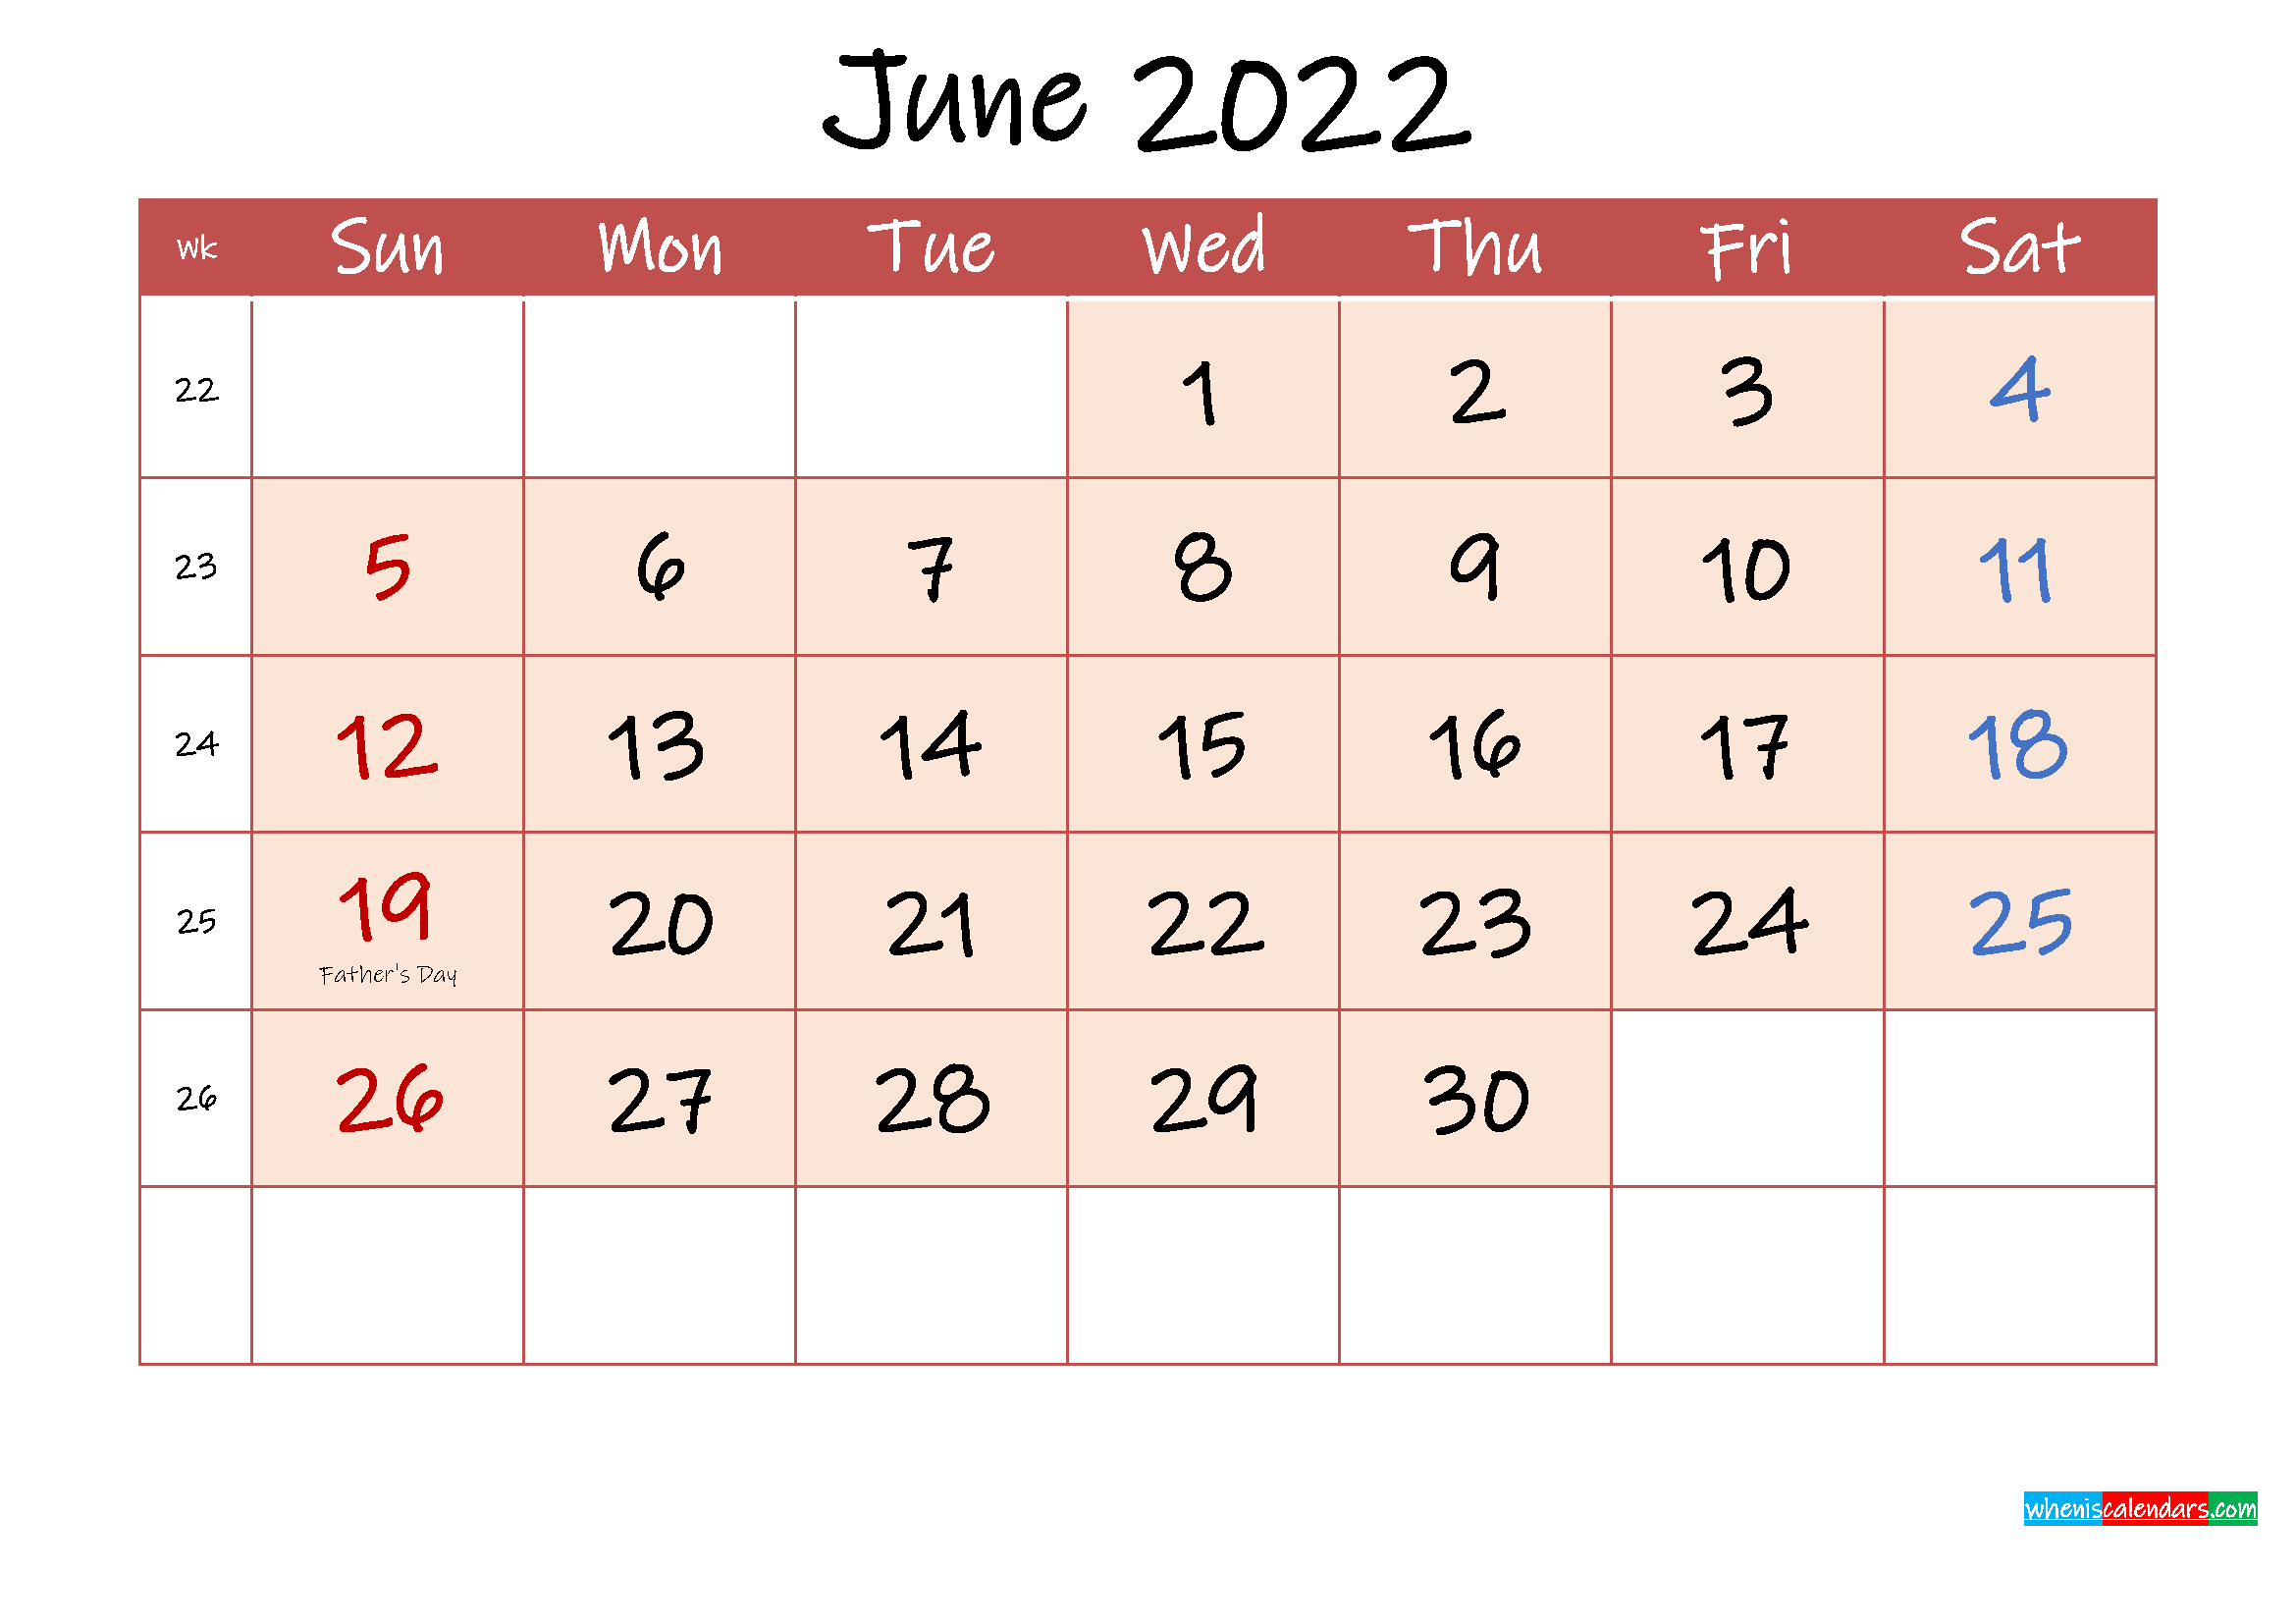 June 2022 Free Printable Calendar With Holidays - Template  June Free Printable Calendar 2022